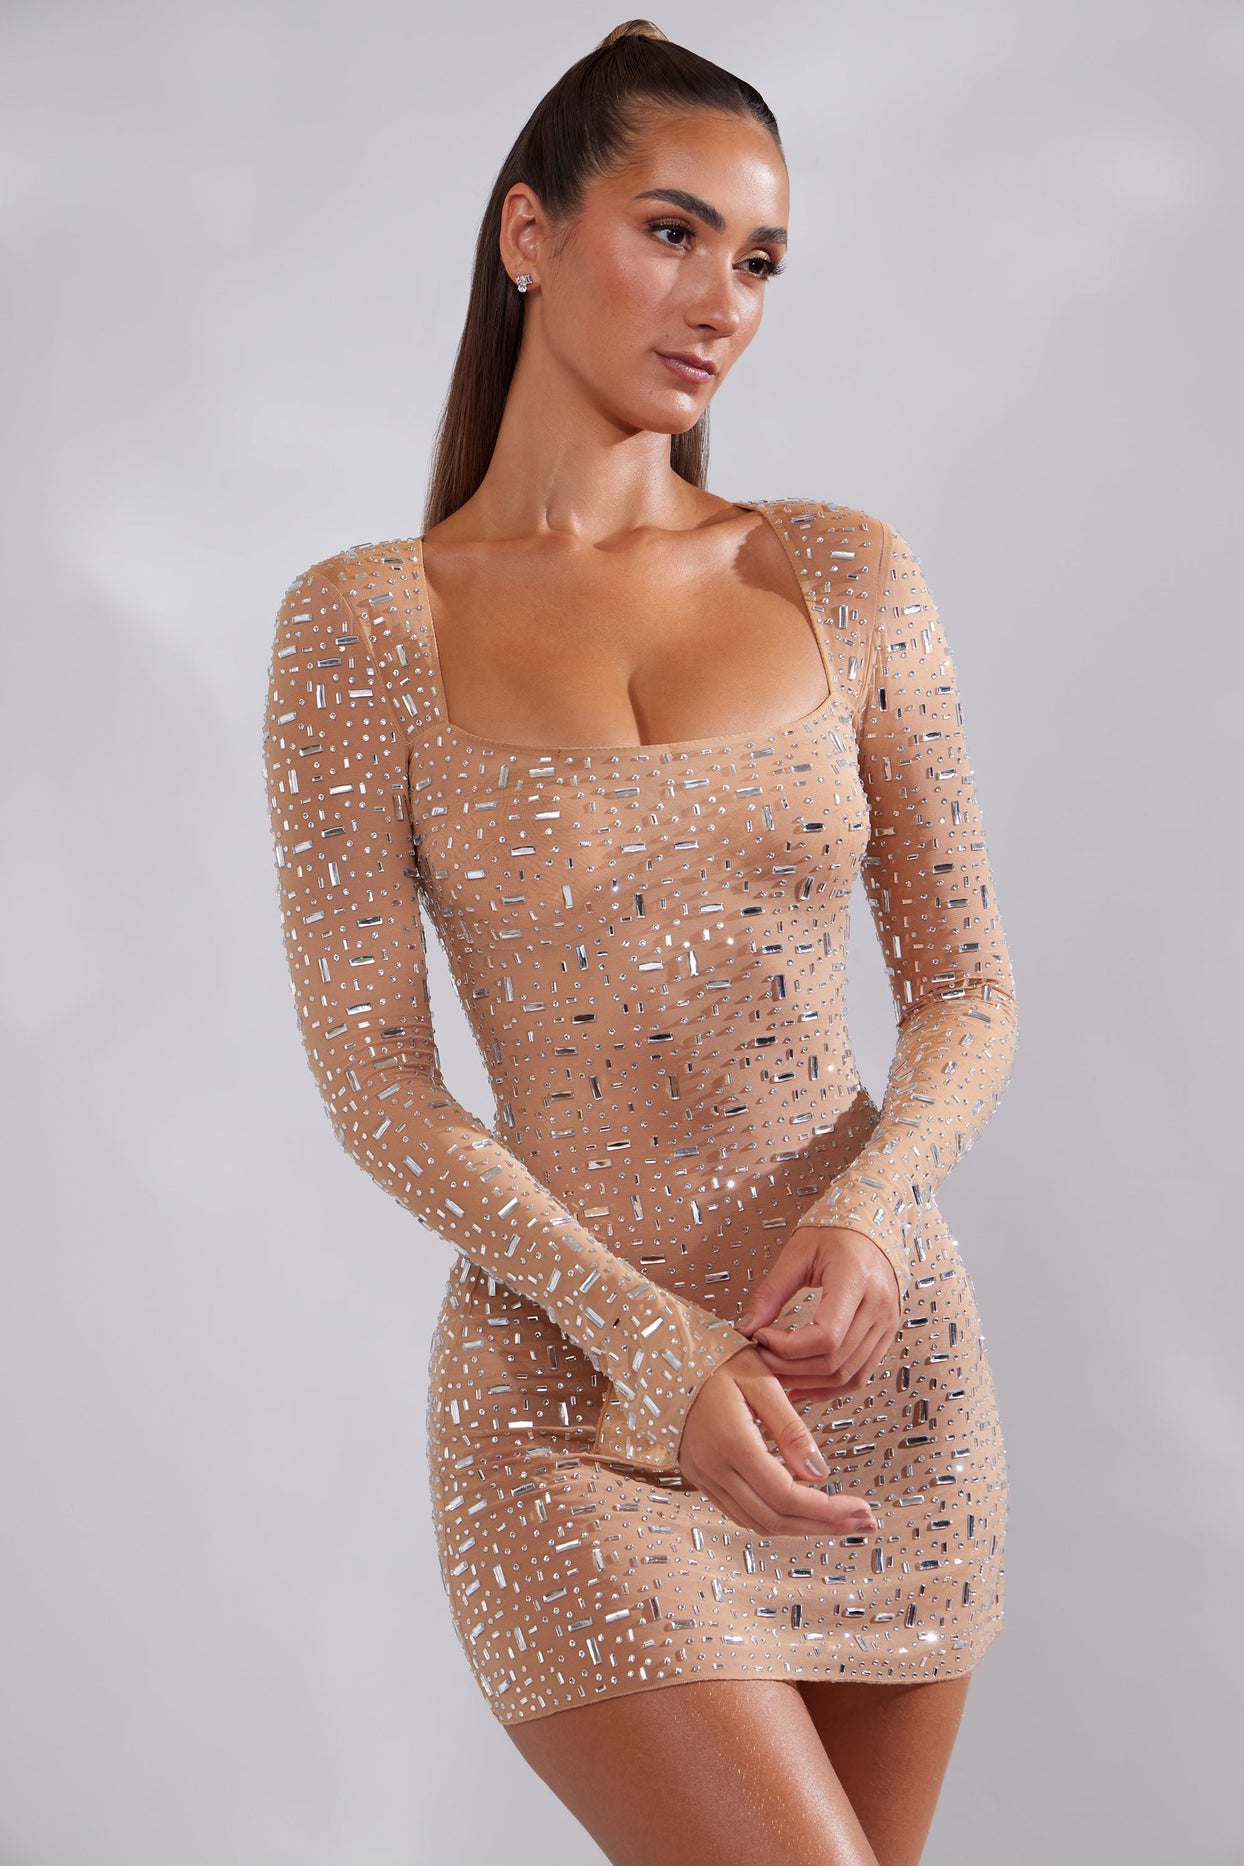 Sheer Embellished Long Sleeve A-Line Mini Dress in Almond